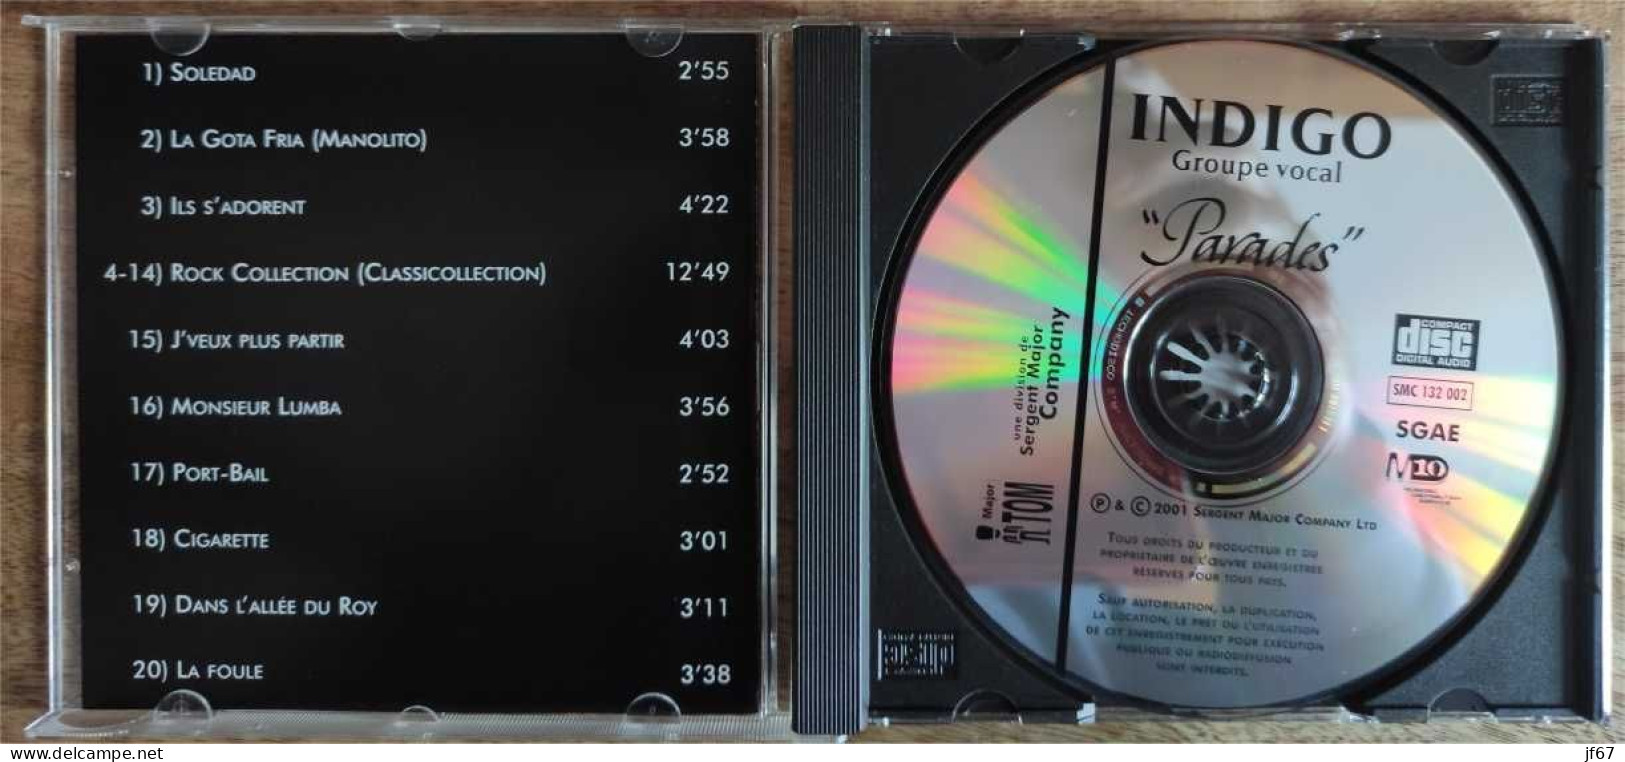 Indigo - Parades (CD) Groupe Vocal - Jazz